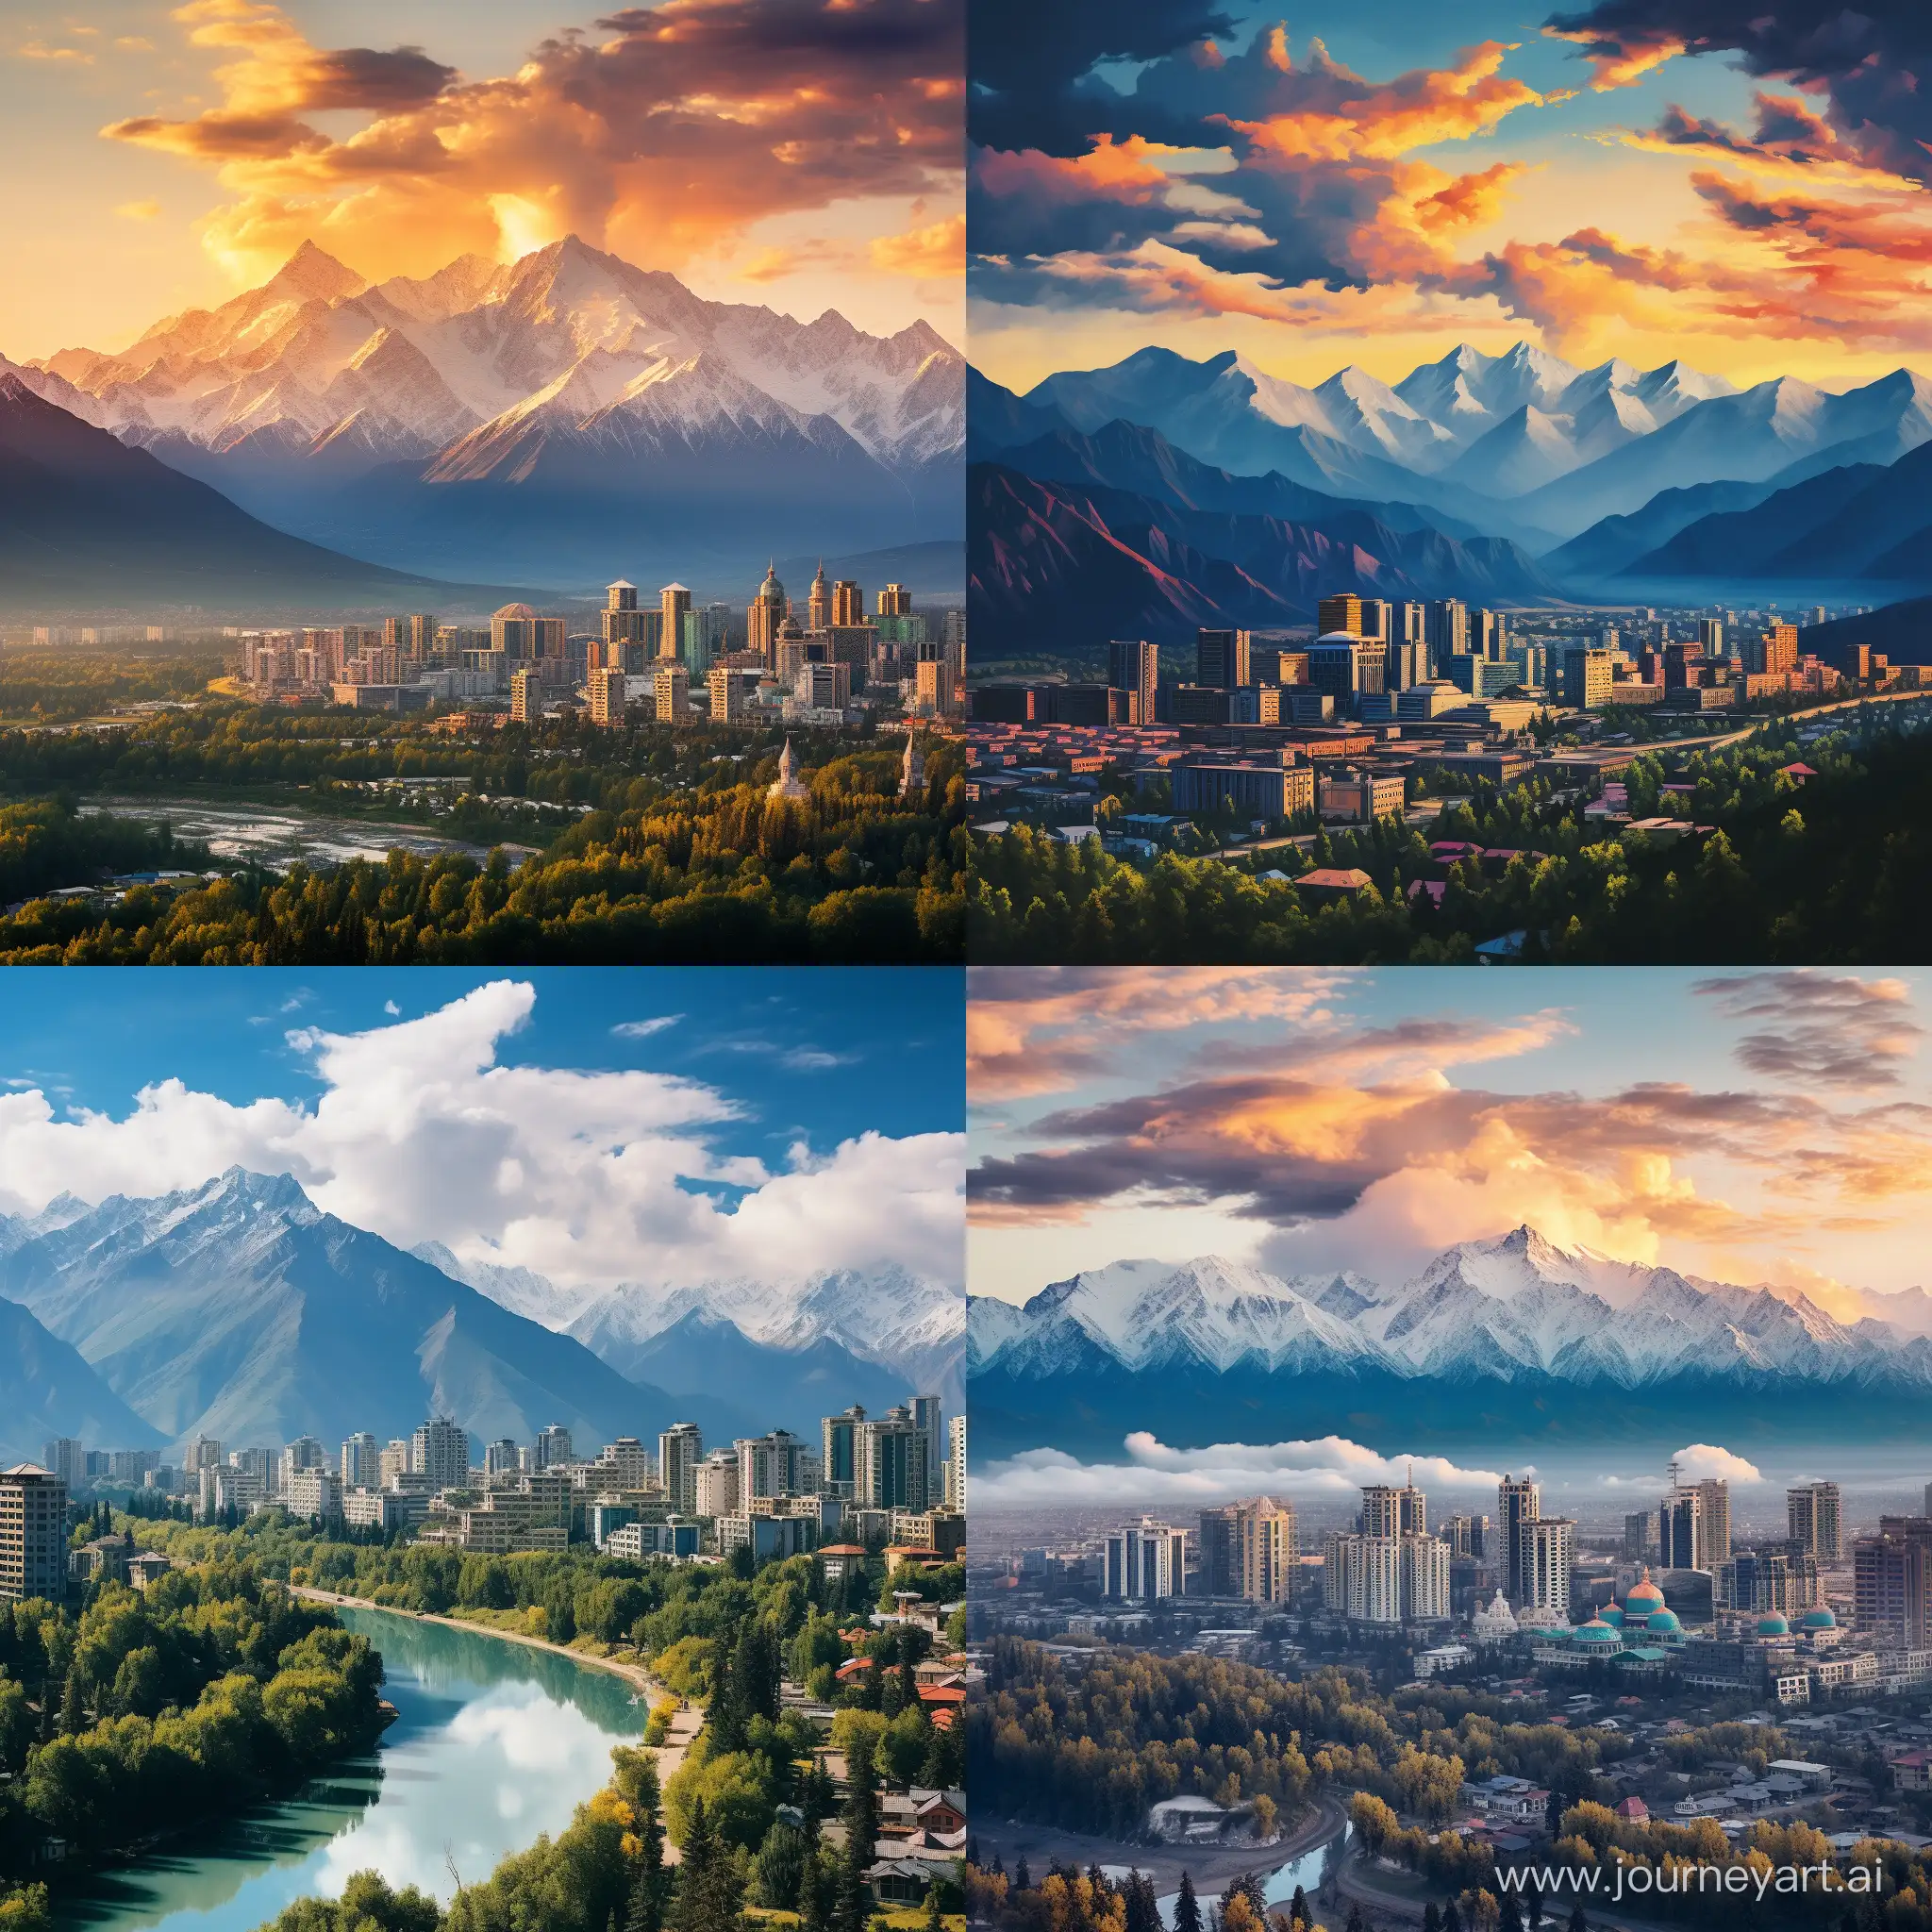 Scenic-Almaty-Kazakhstan-A-Breathtaking-11-Aspect-Ratio-View